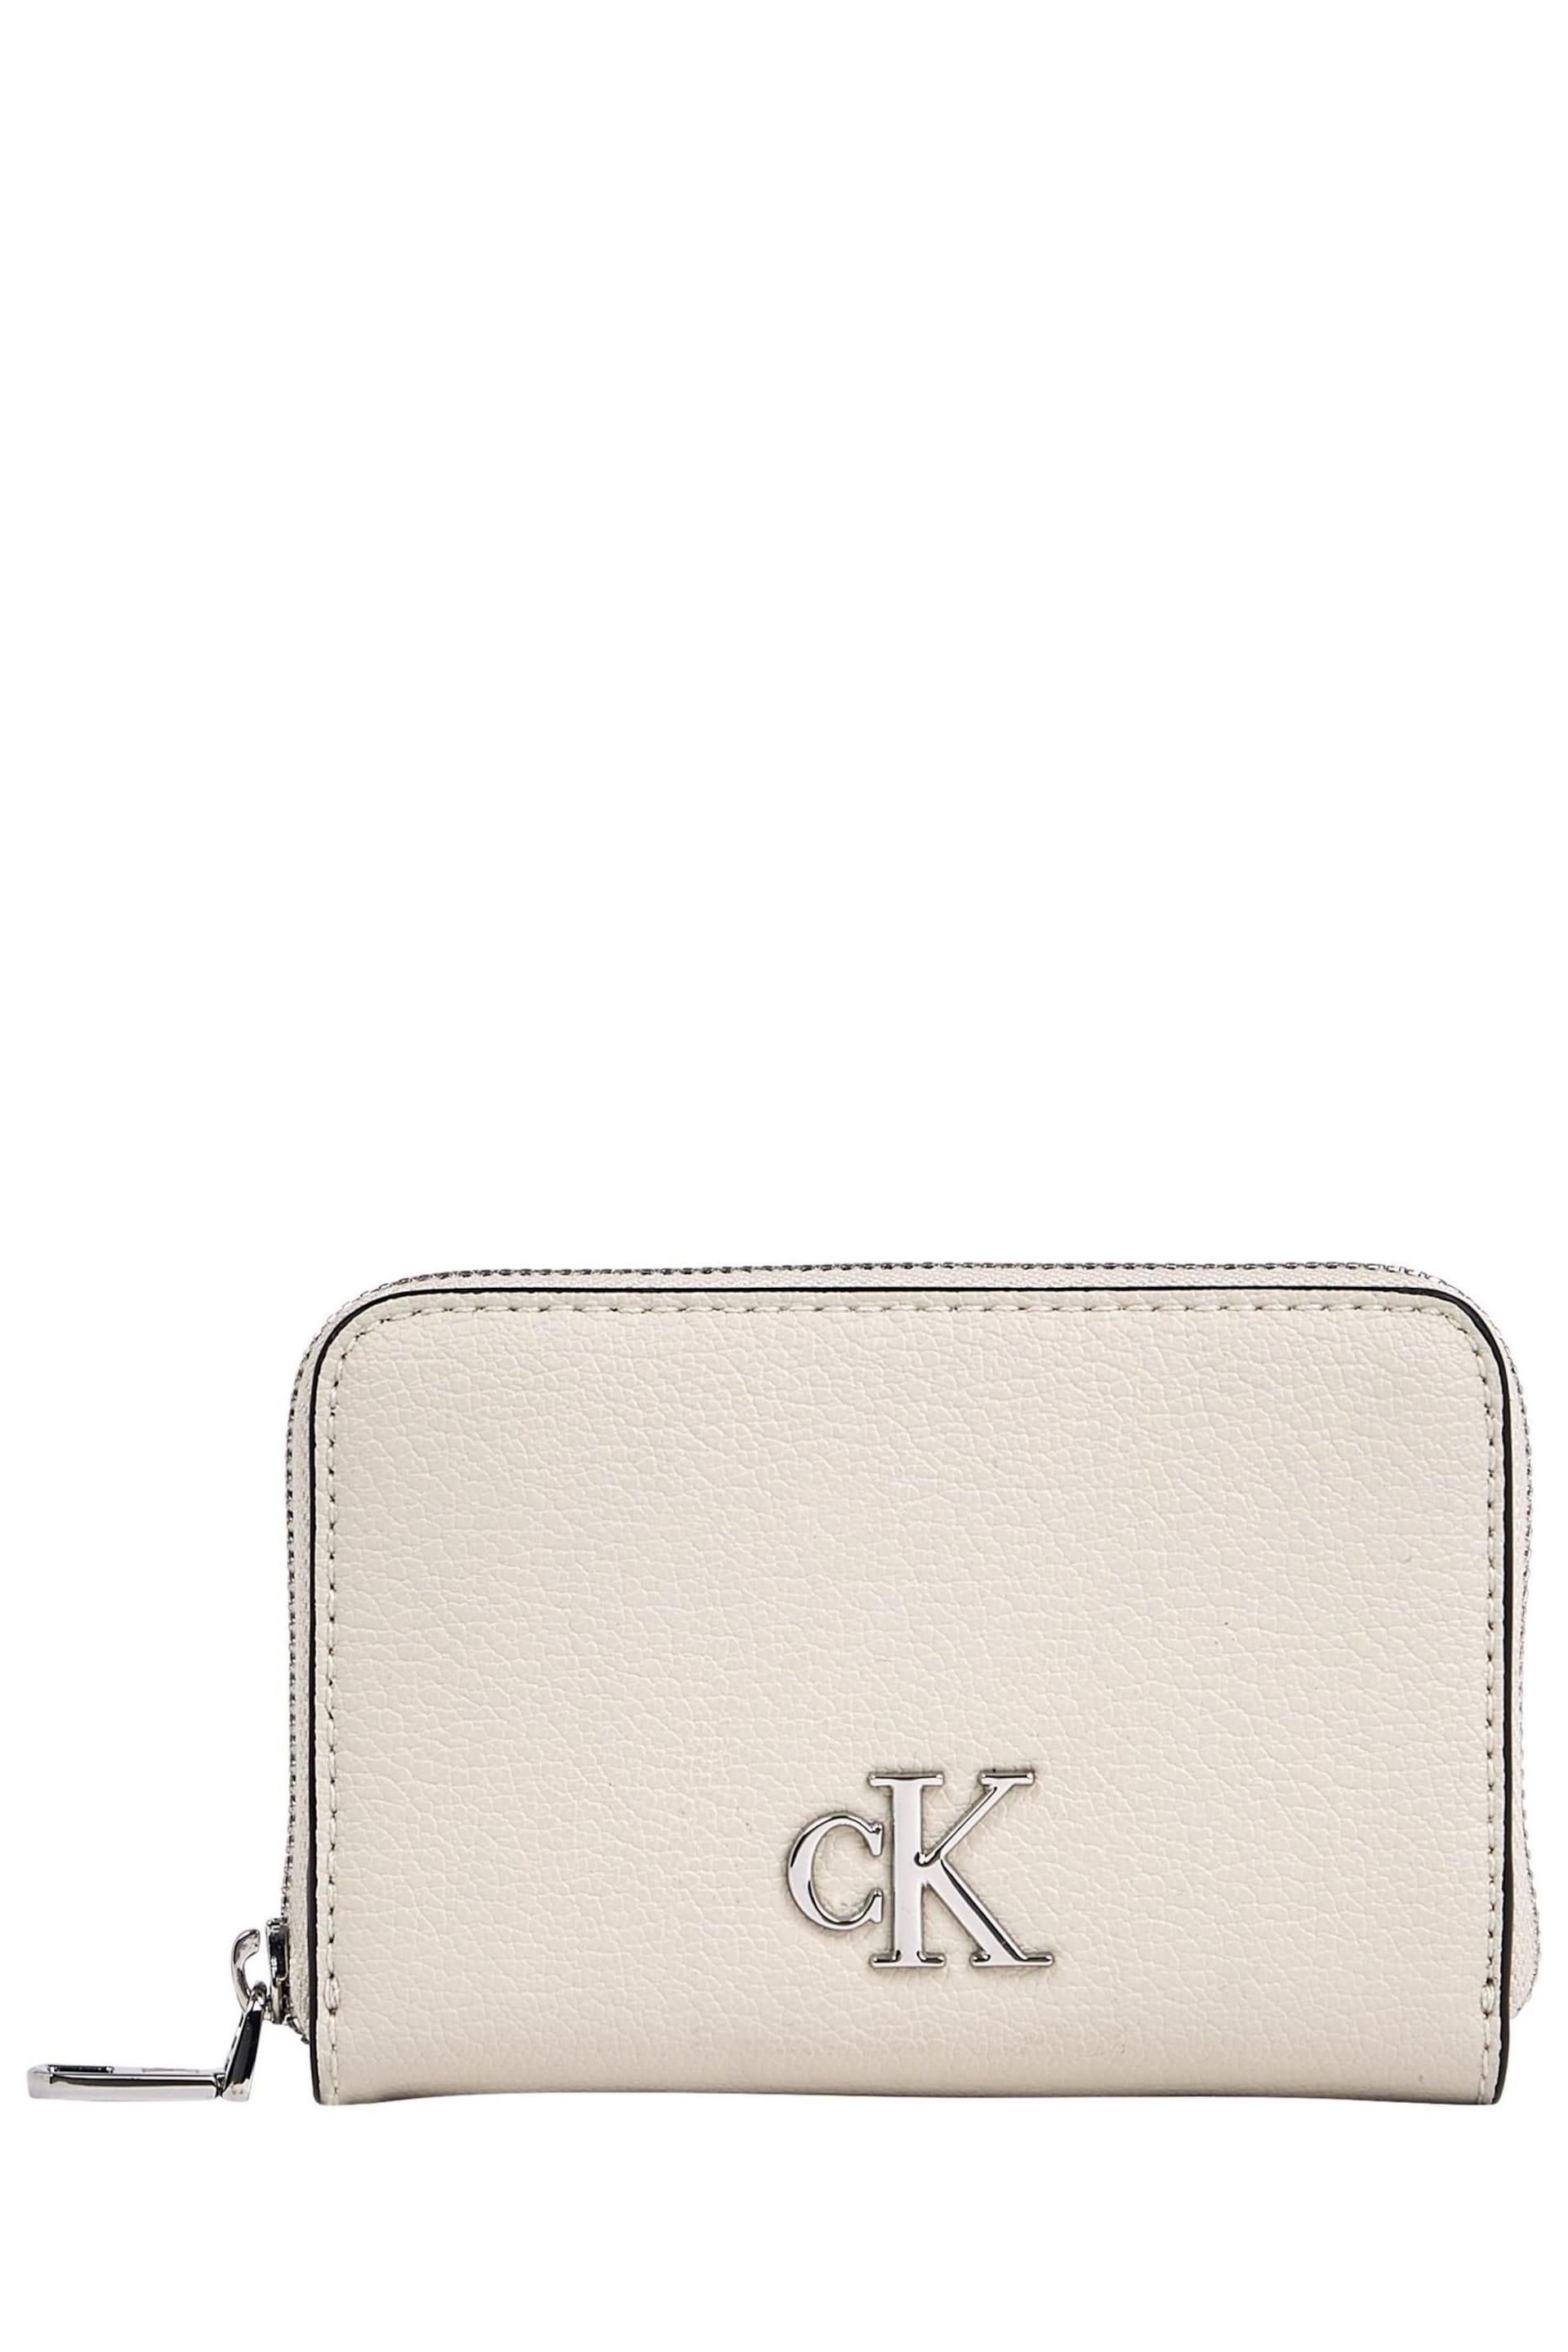 Calvin Klein White Minimal Monogram Wallet - Image 1 of 2